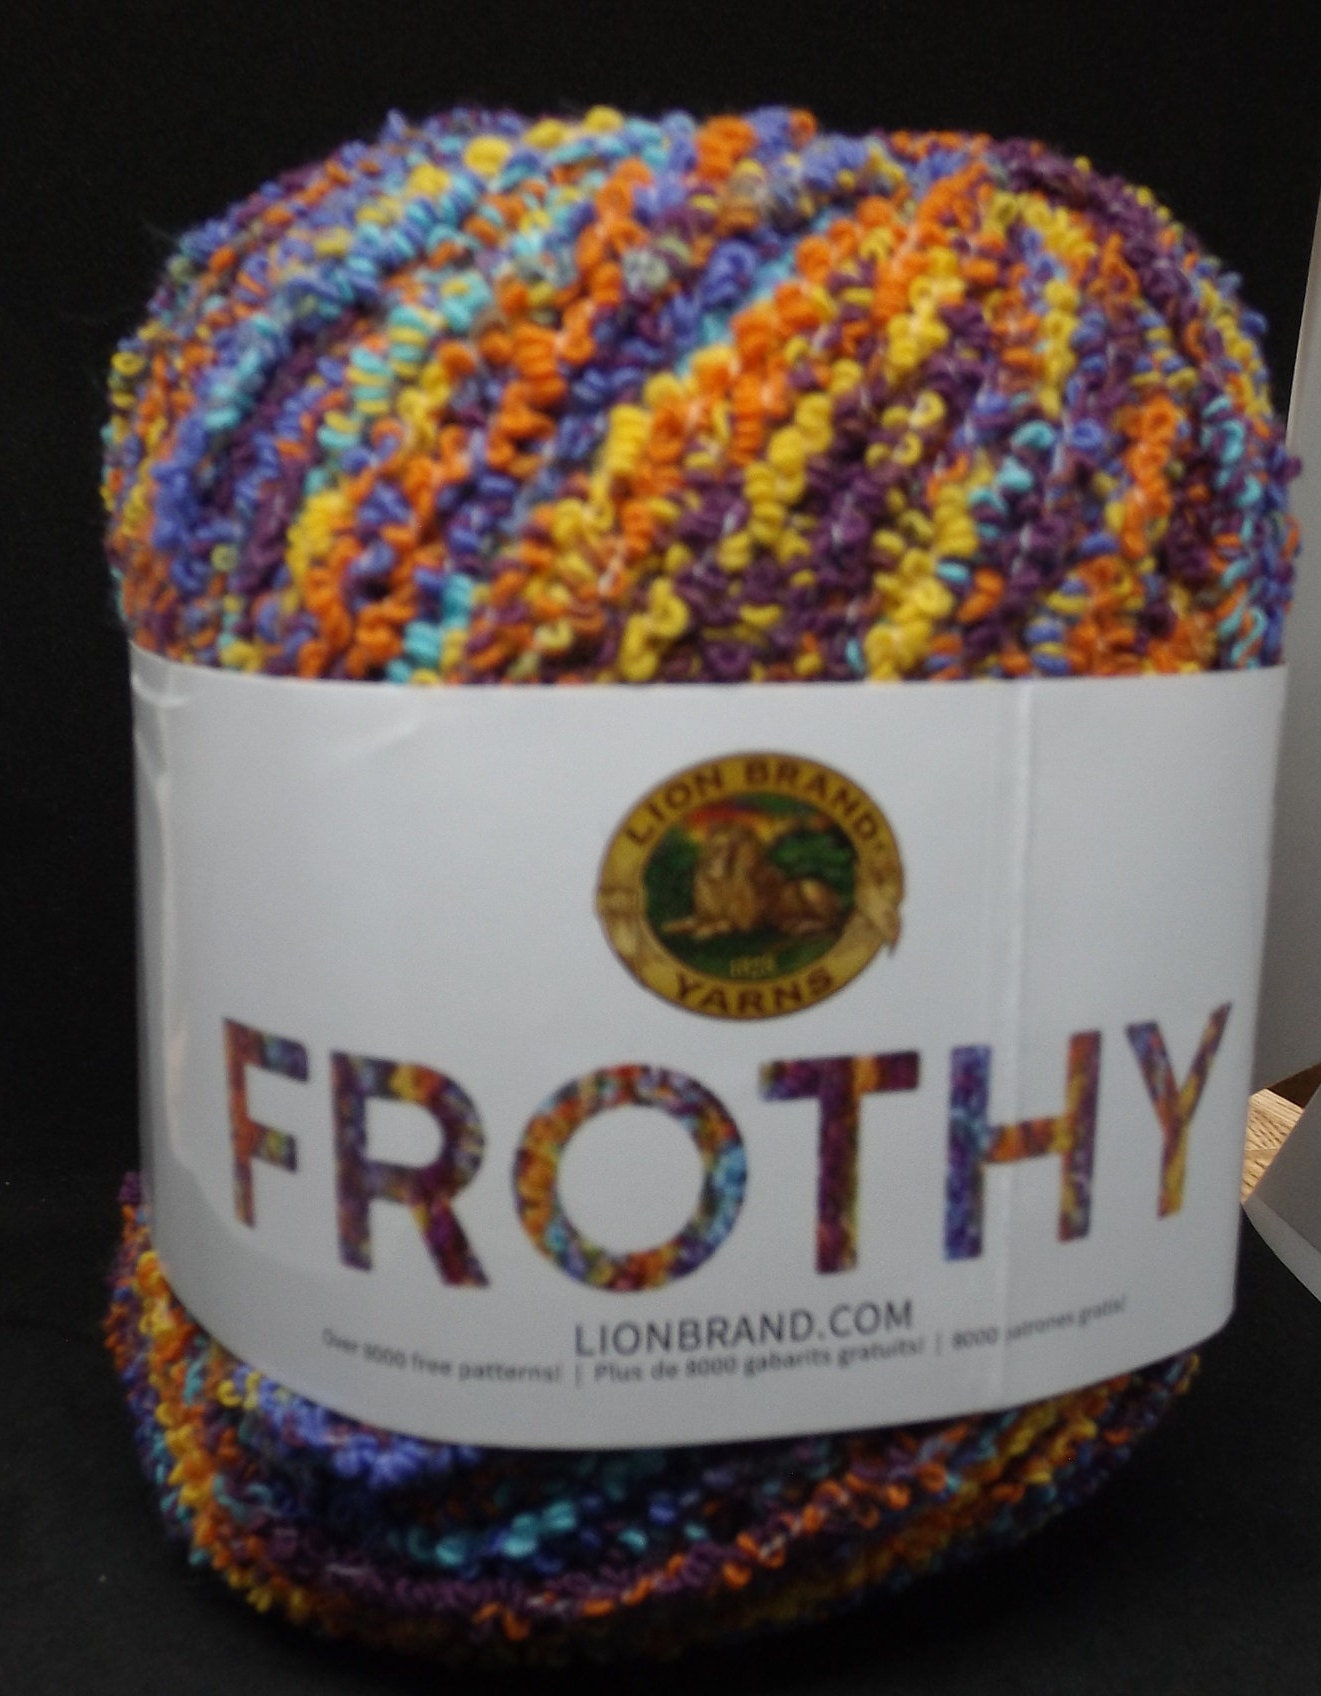 Lion Brand Homespun Yarn Color Satin Lot of 3 Skeins NWT Crochet Knit